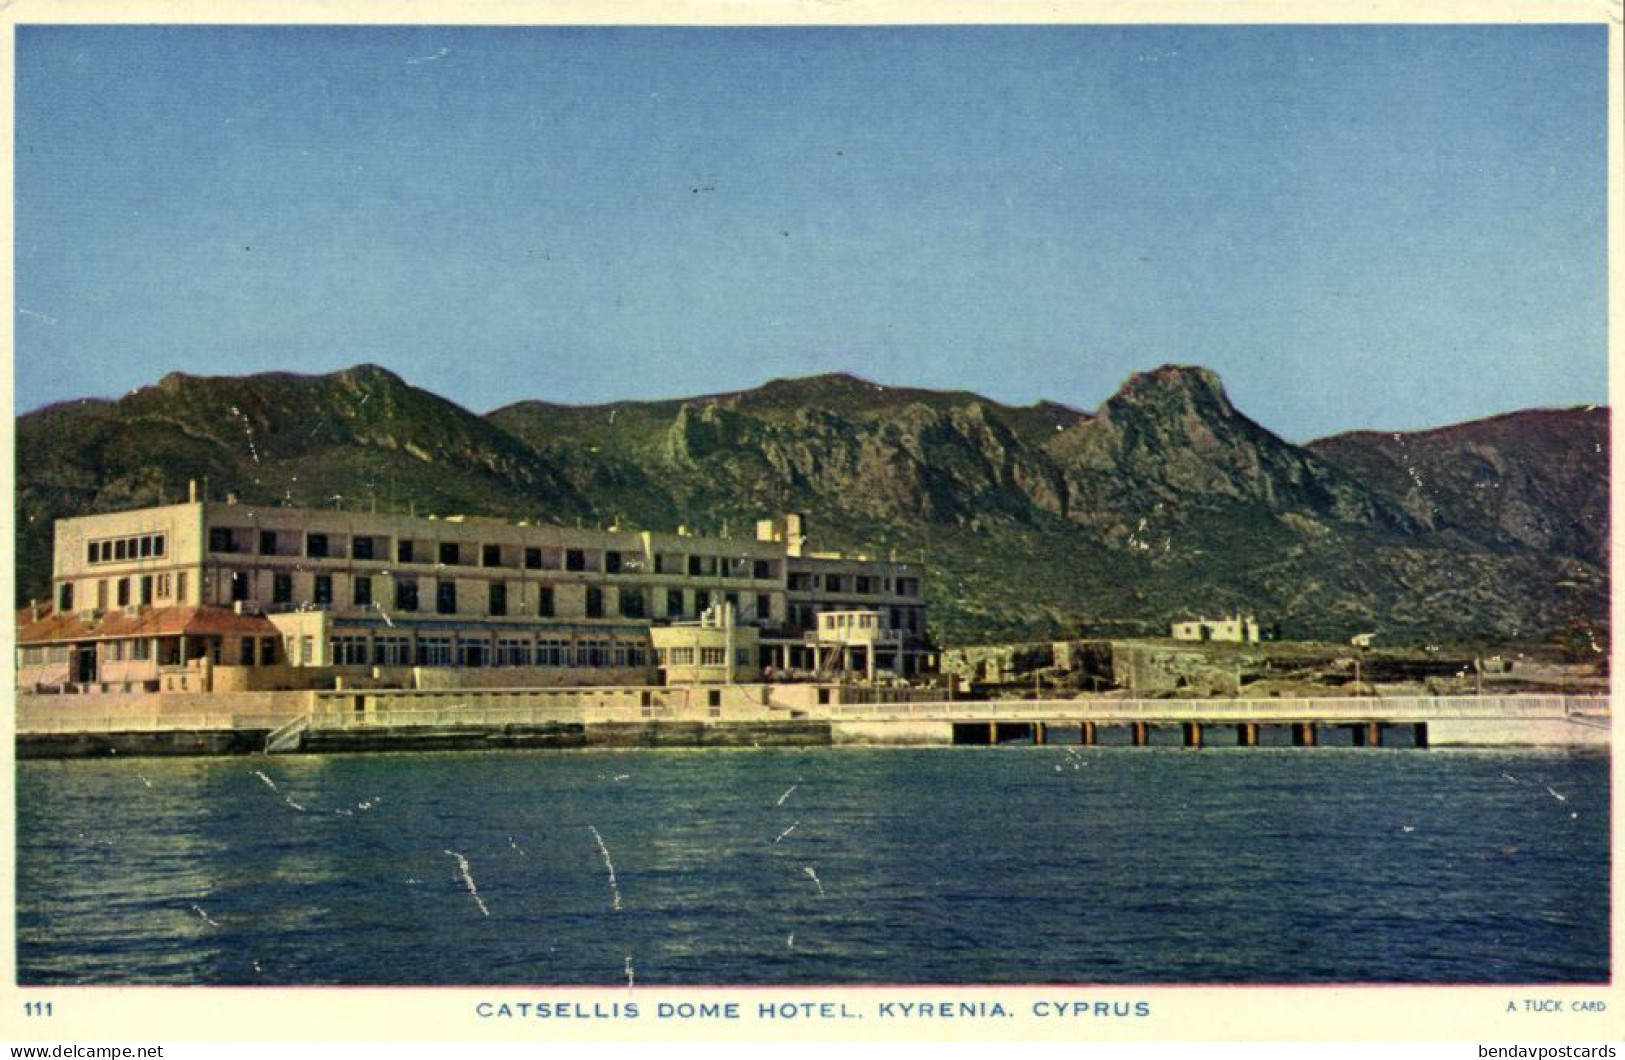 Cyprus, KYRENIA, Catsellis Dome Hotel (1960s) Raphael Tuck 111 Postcard - Cyprus